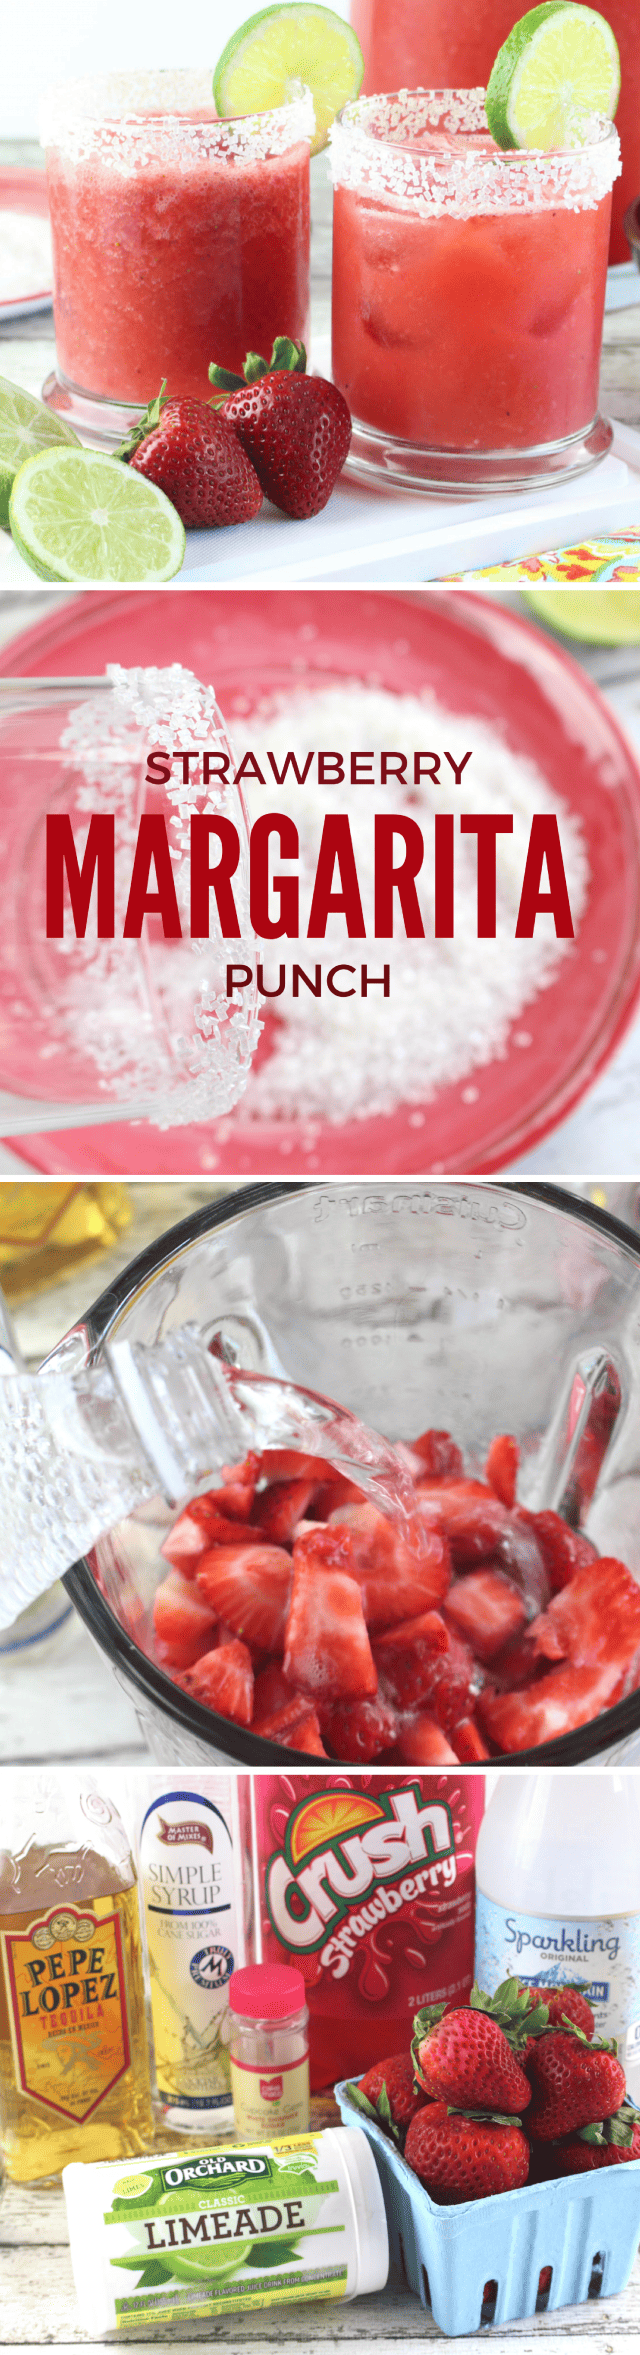 Strawberry Margarita Punch Drink Recipe